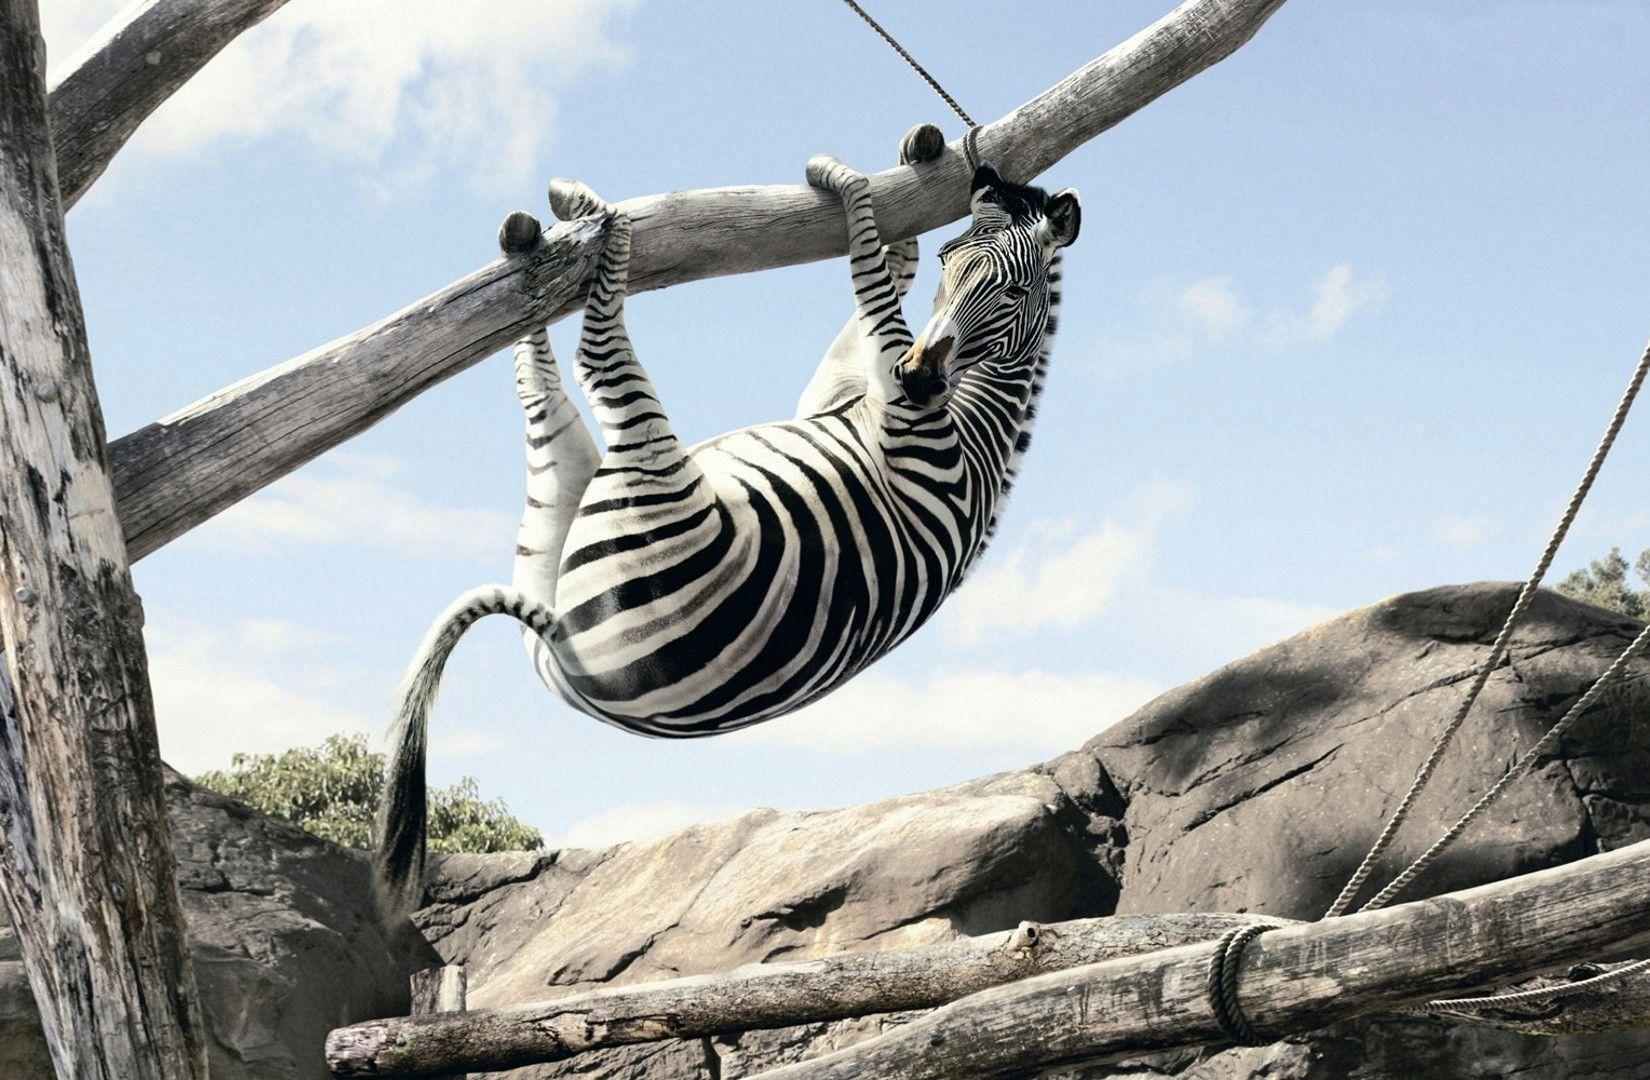 Zebra Desktop Wallpaper FREE on Latoro.com